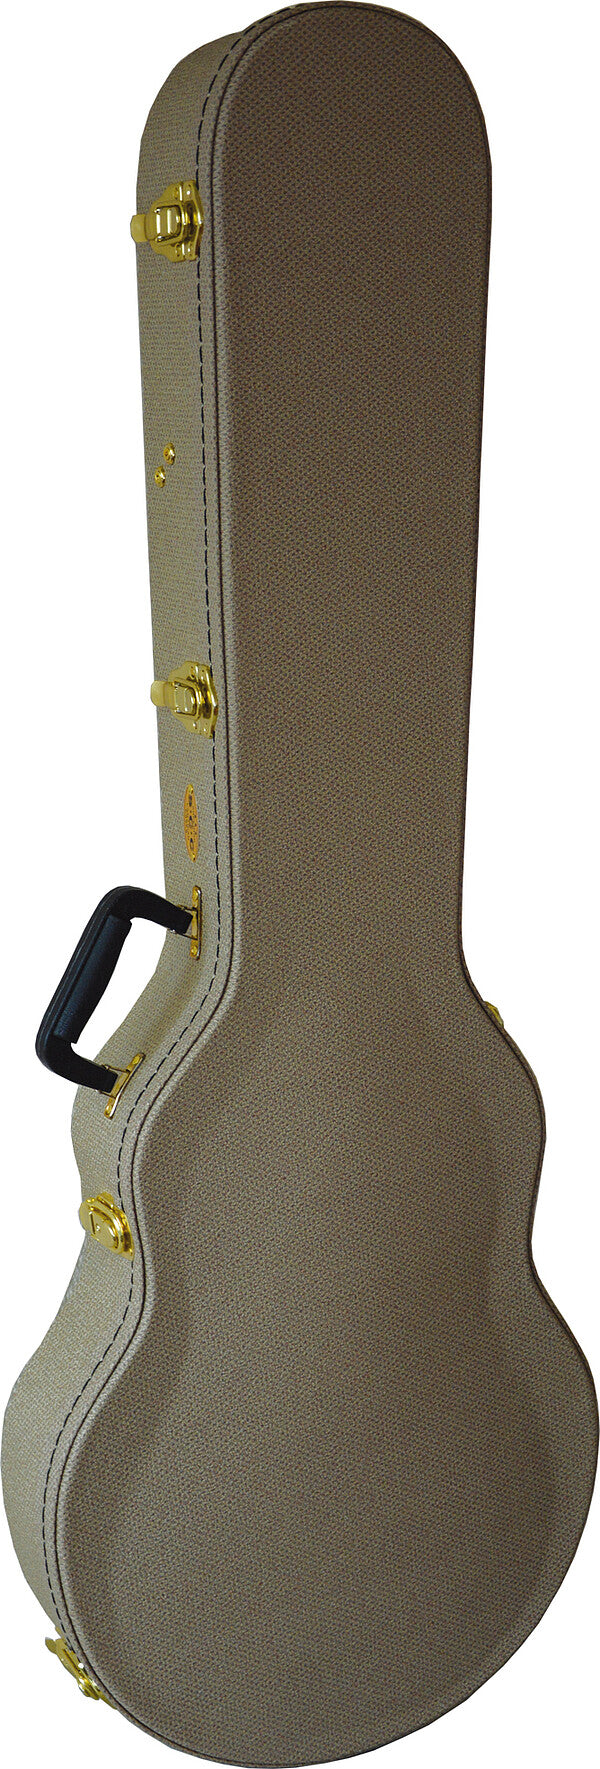 SCC 650106 Les Paul Arched Taupe Tweed Gitarrenkoffer